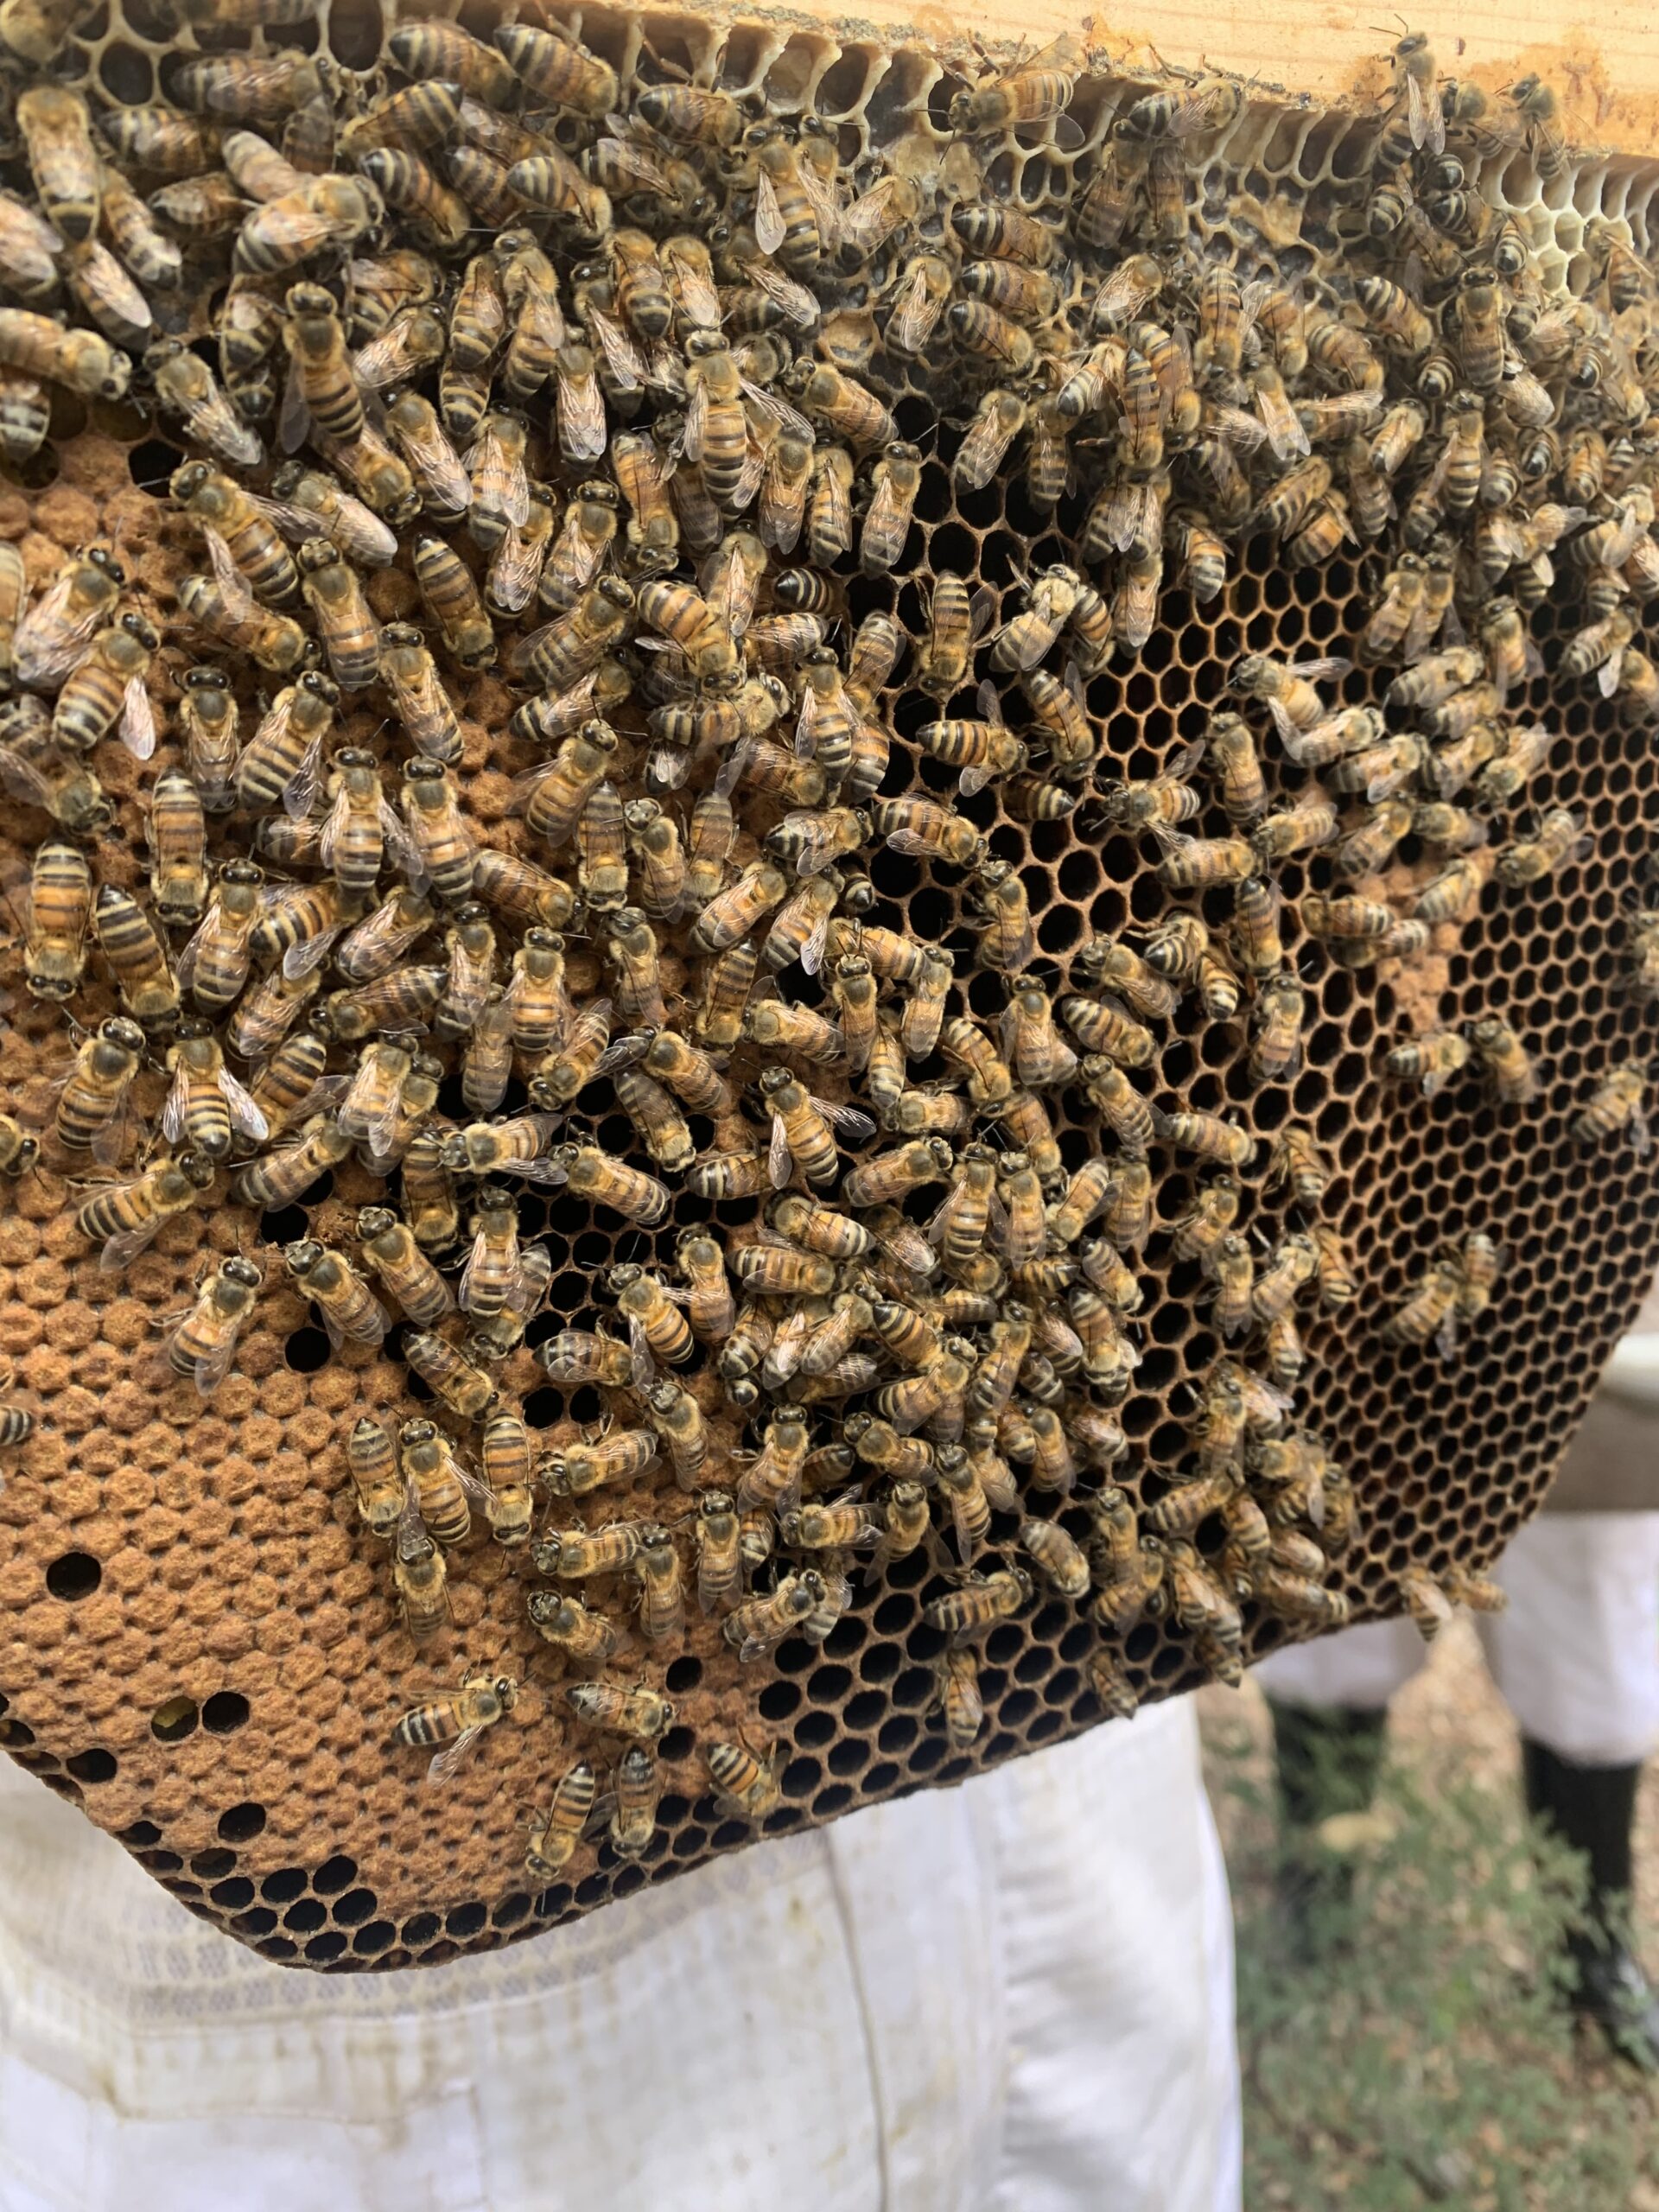 Buzzing through College: My Sweet Journey into Beekeeping